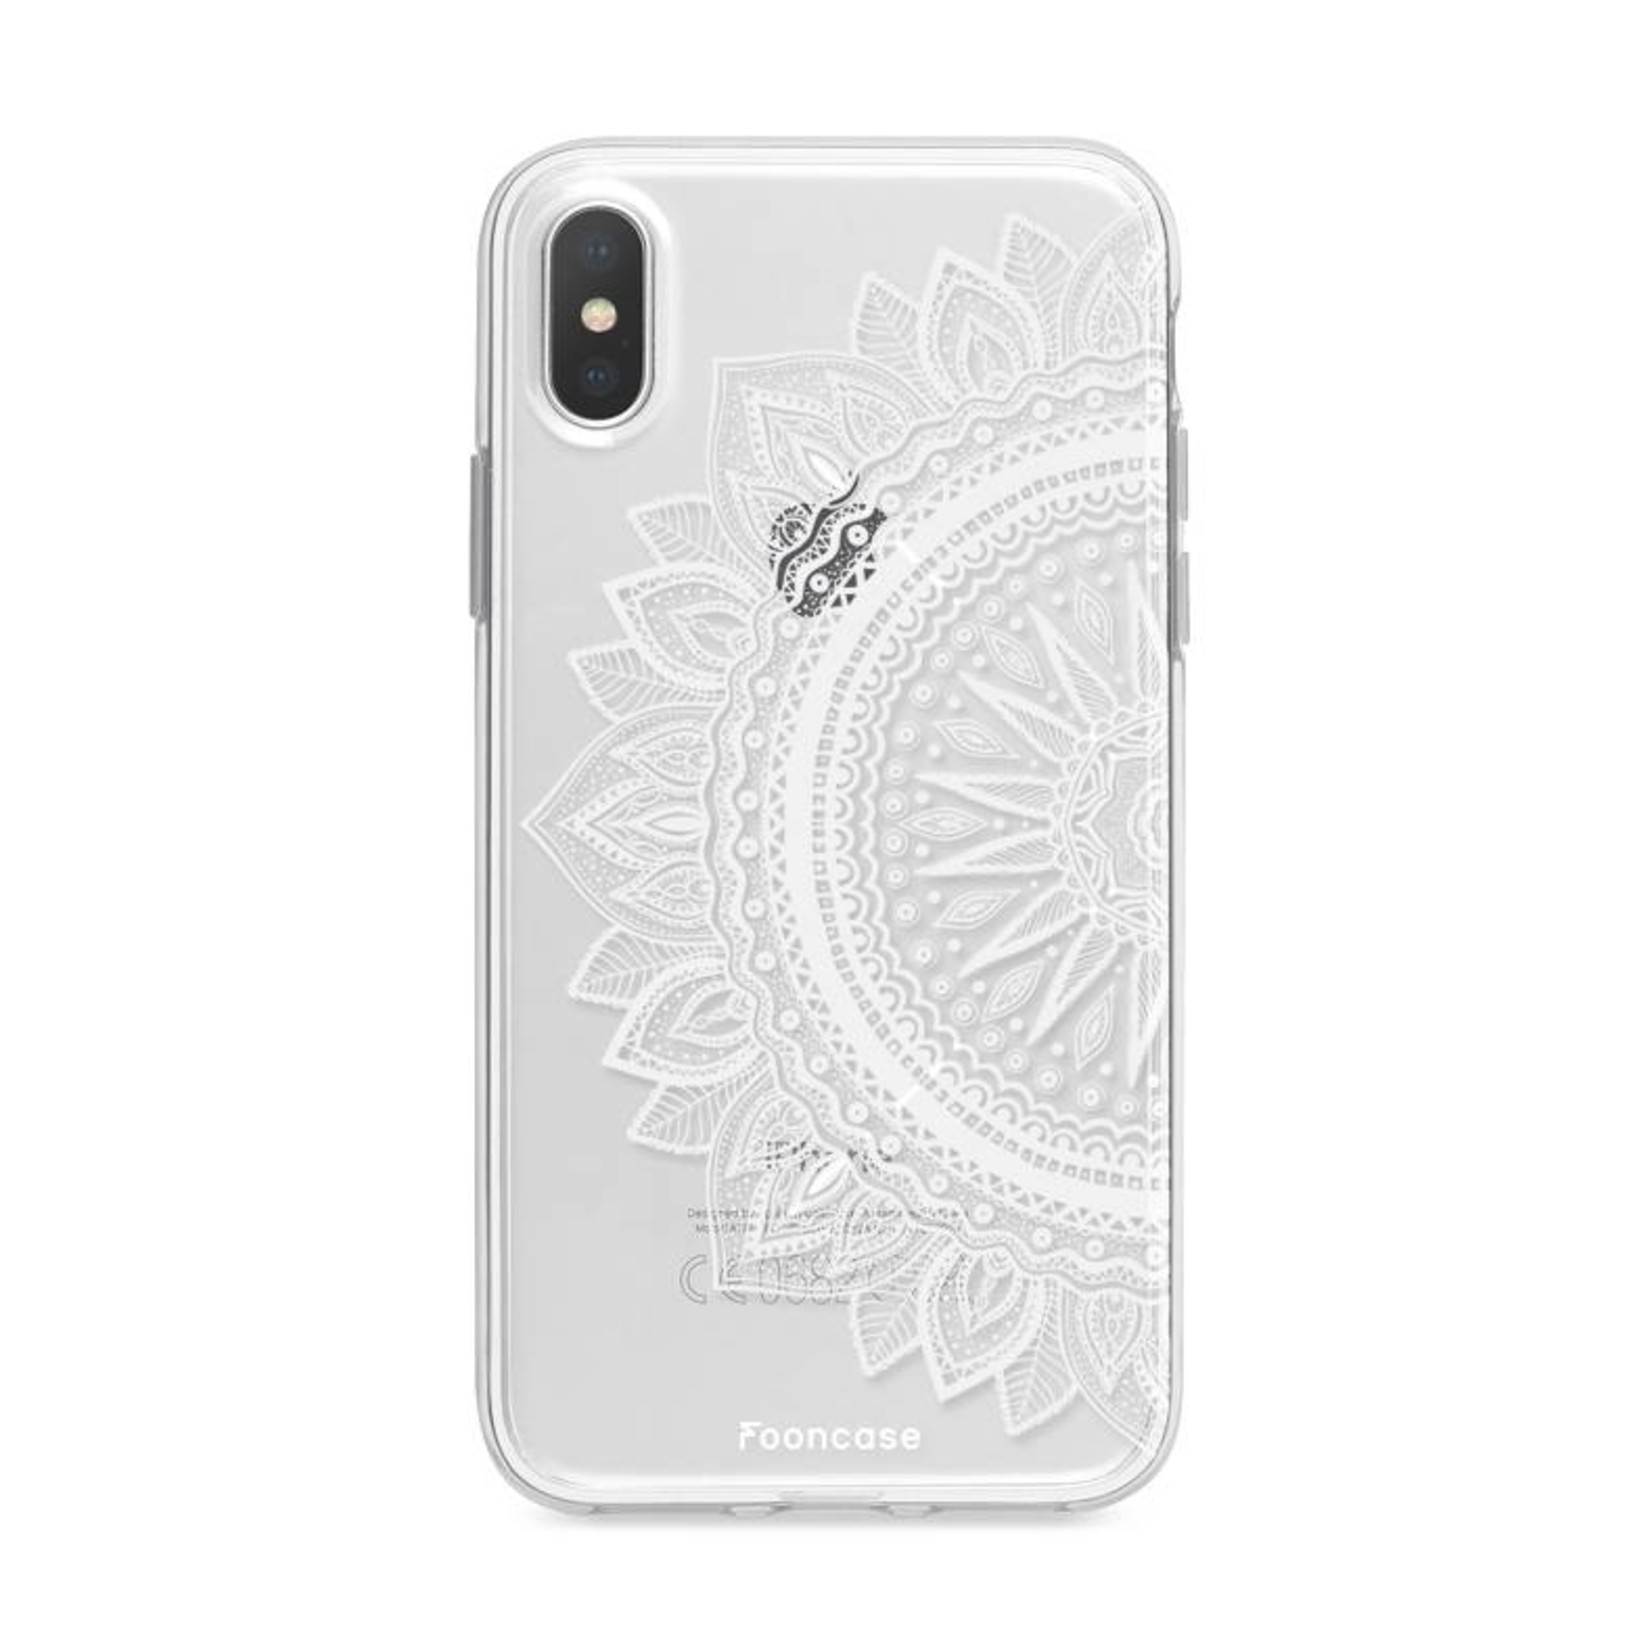 FOONCASE Iphone X Case - Mandala